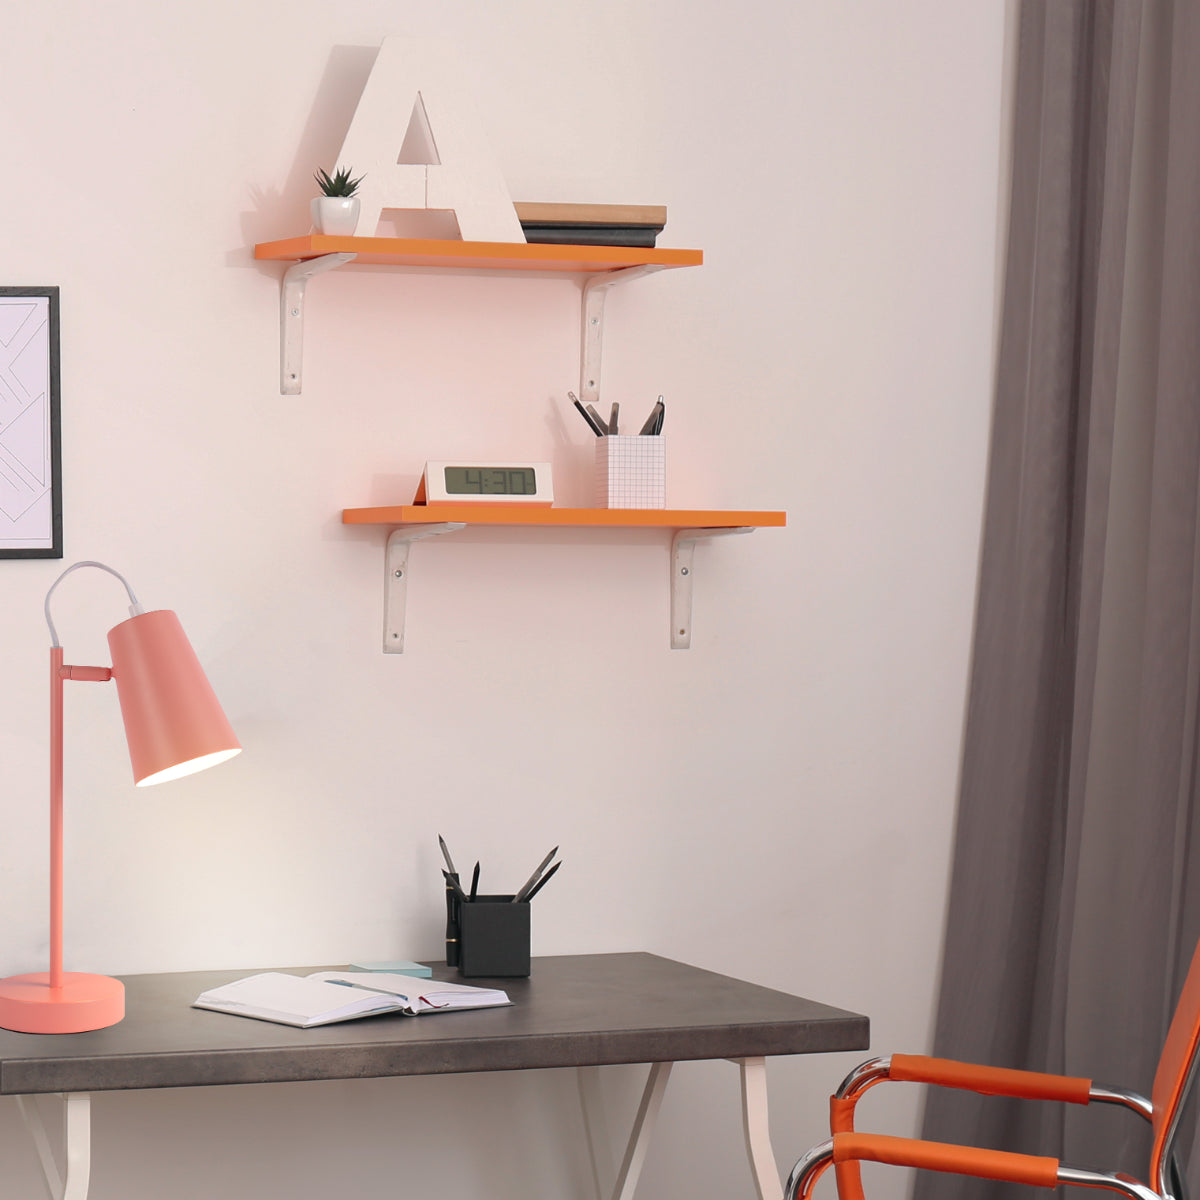 Where to use Sleek Cut Cone Desk Lamp in Vibrant Colors - Modern Elegance 130-03668